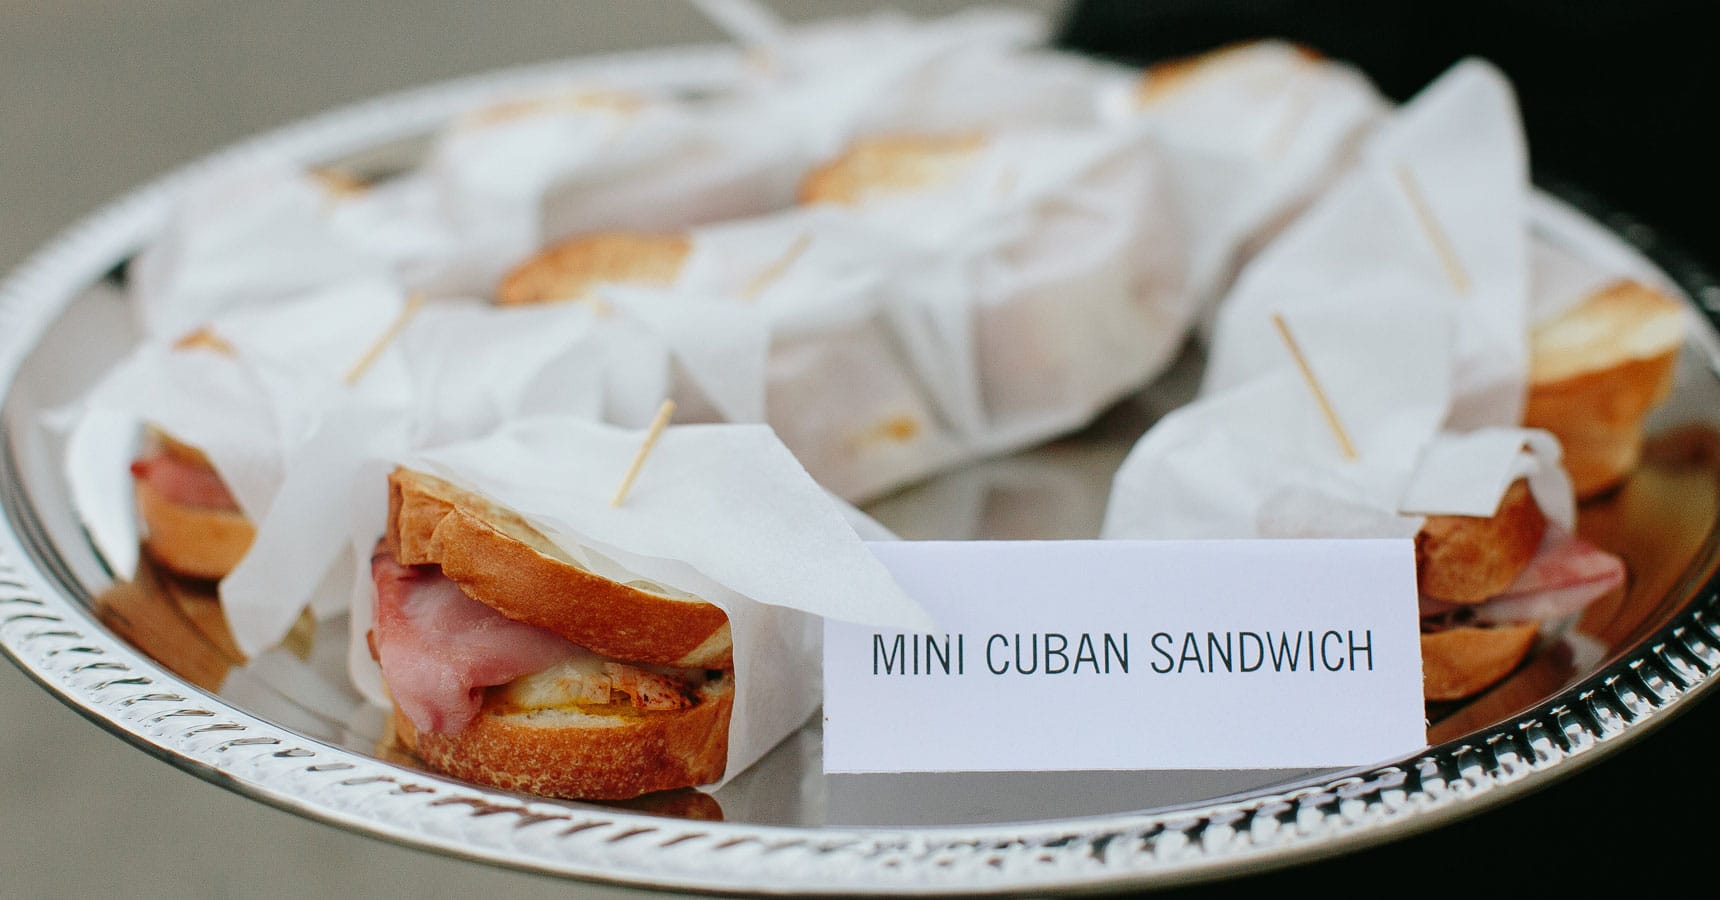 Mini cuban sandwich by Crave Catering